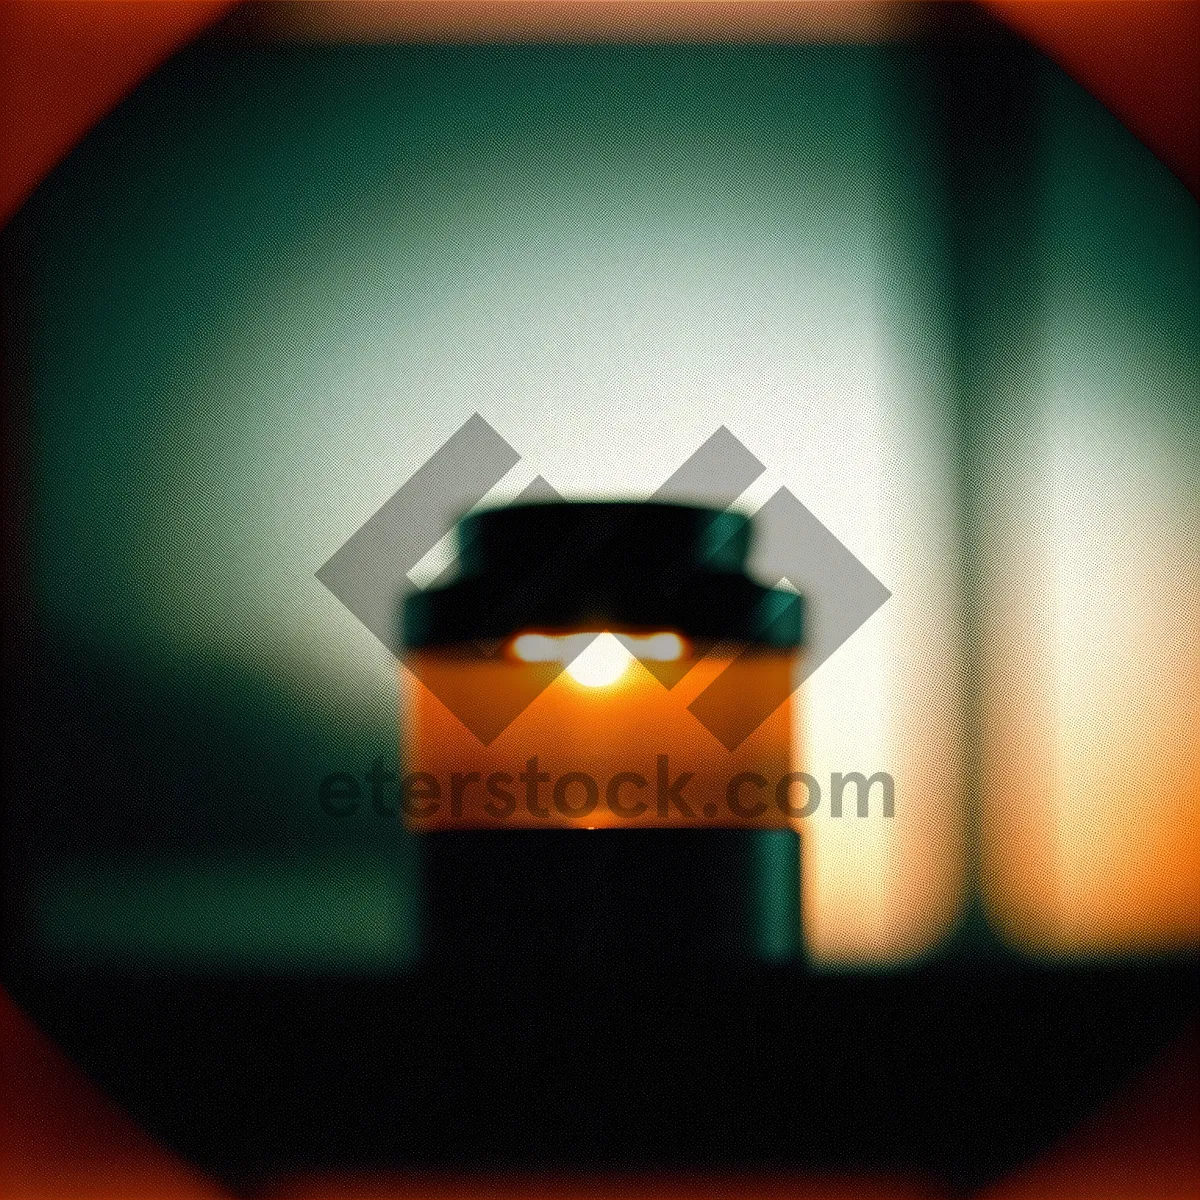 Picture of LED Pill Bottle Illuminating Dark Glass Vessel